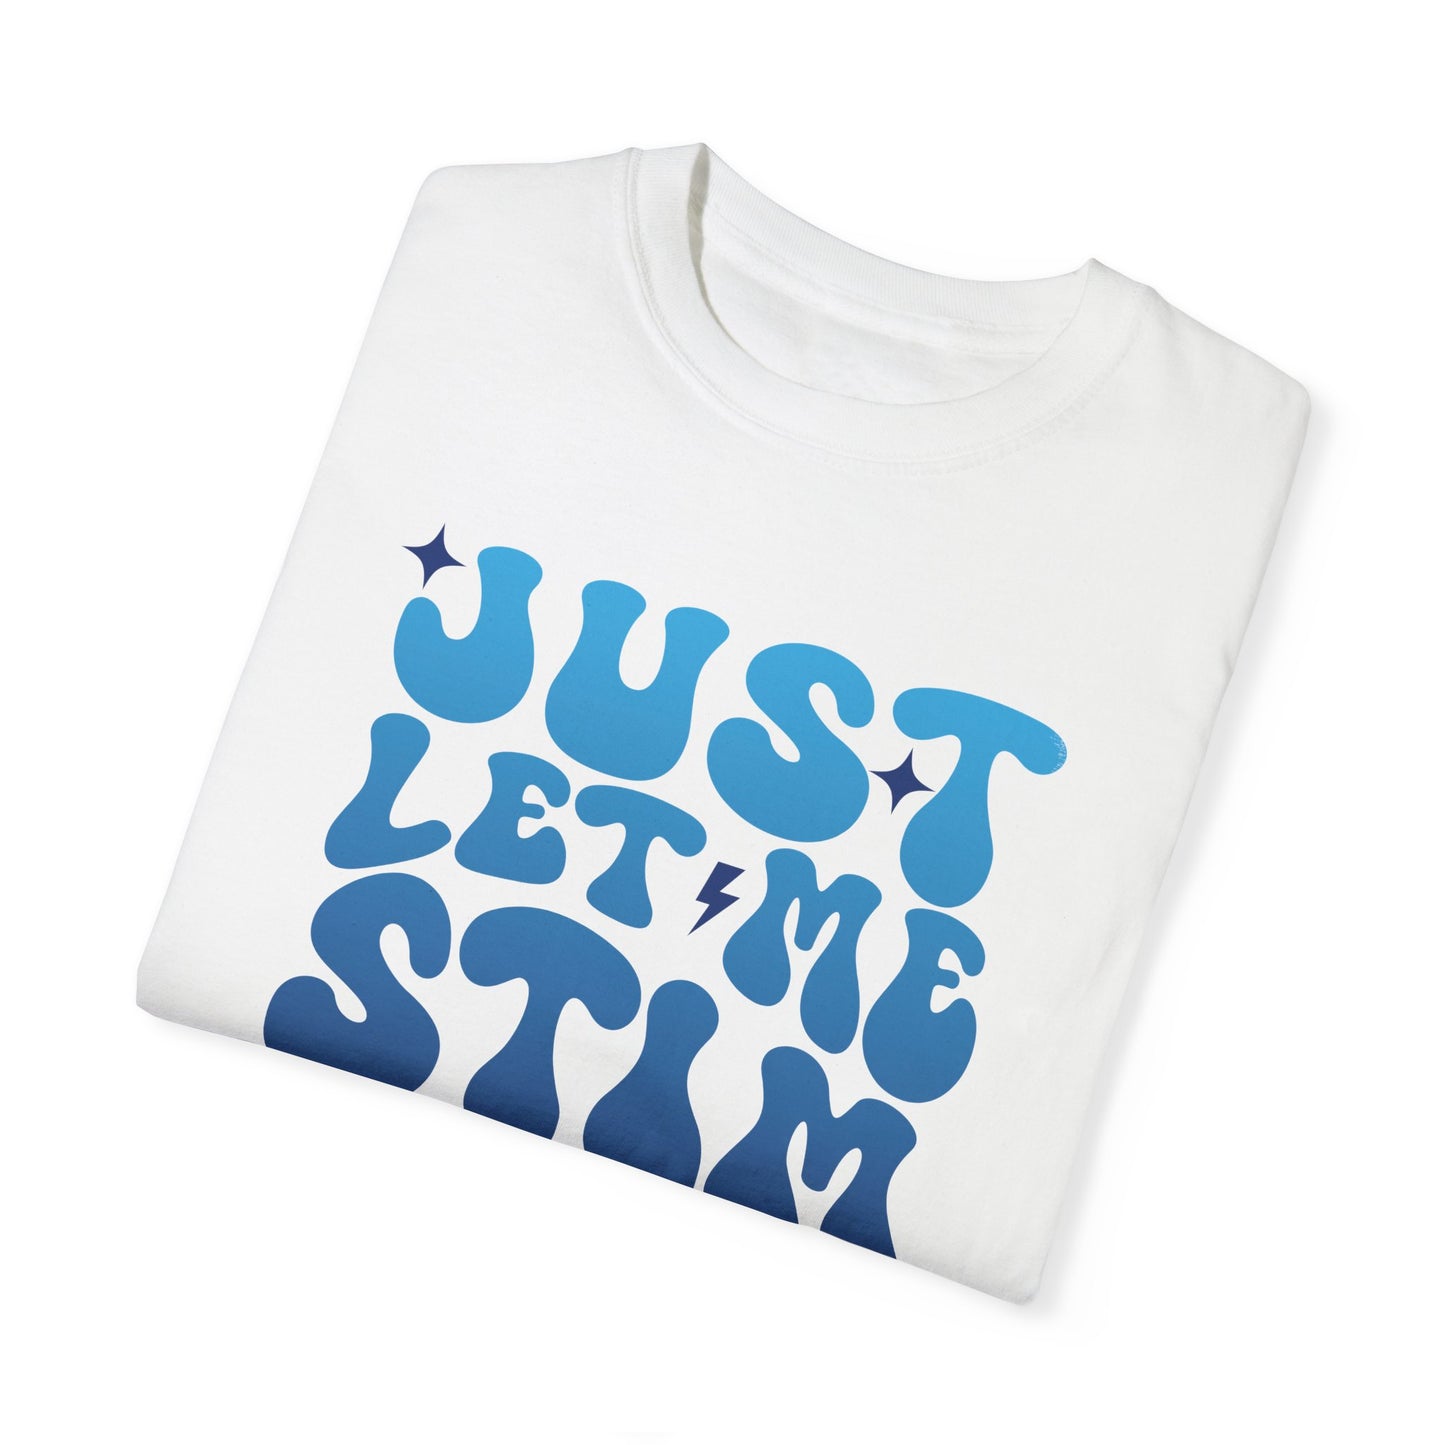 Just Let Me Stim Bro | Retro Autism Appreciation Shirt | Comfort Colors T-Shirt